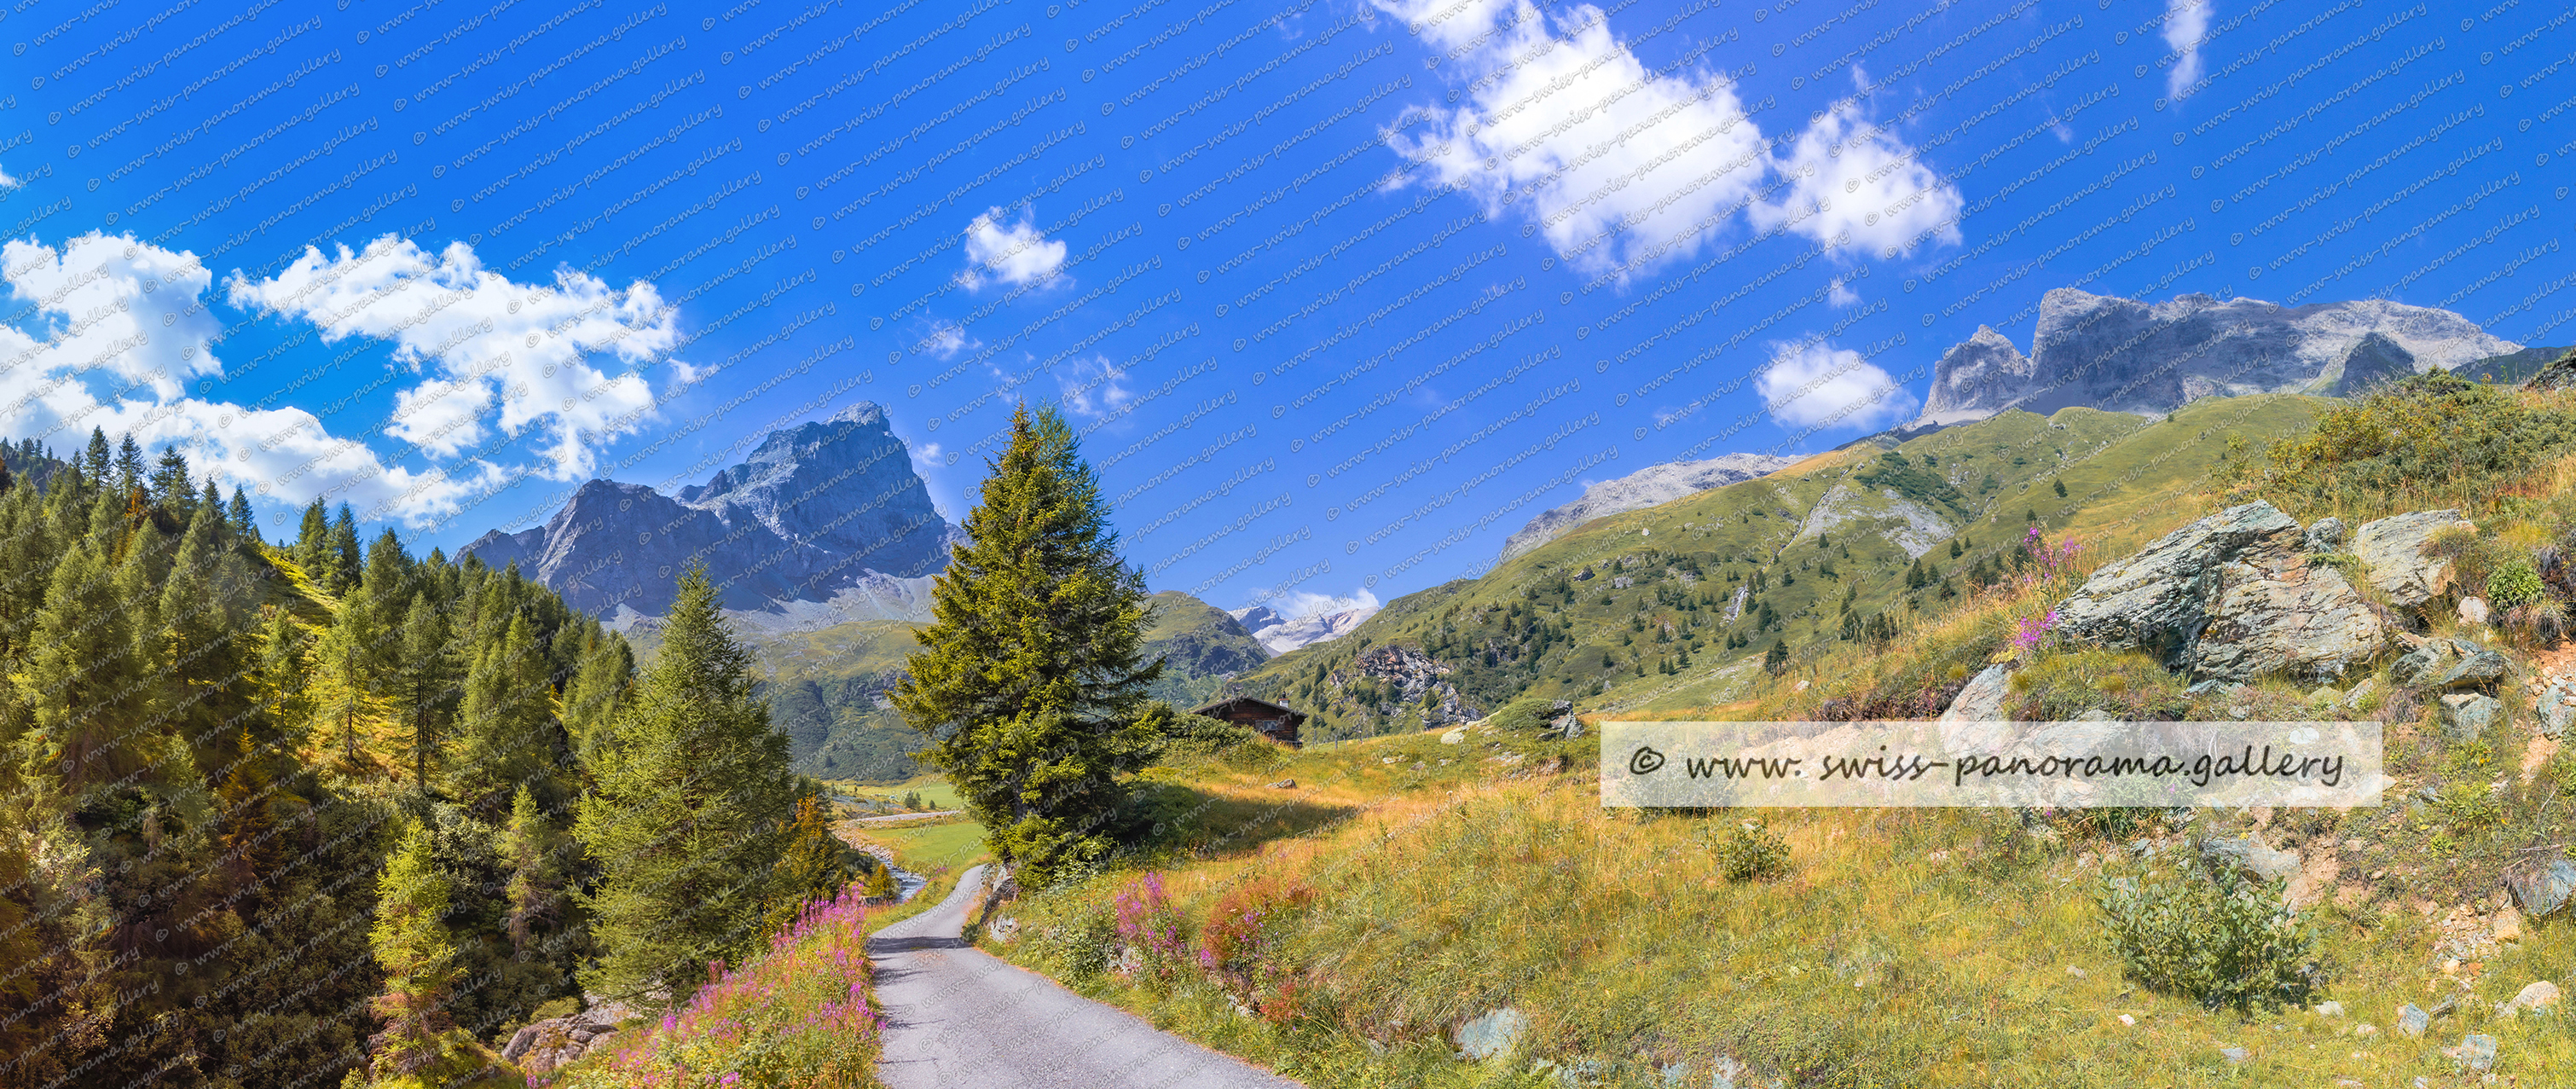 Val Faller Piz Plate und Piz Forbesche, Schweizer Alpenpanorama, swiss panorama.gallery